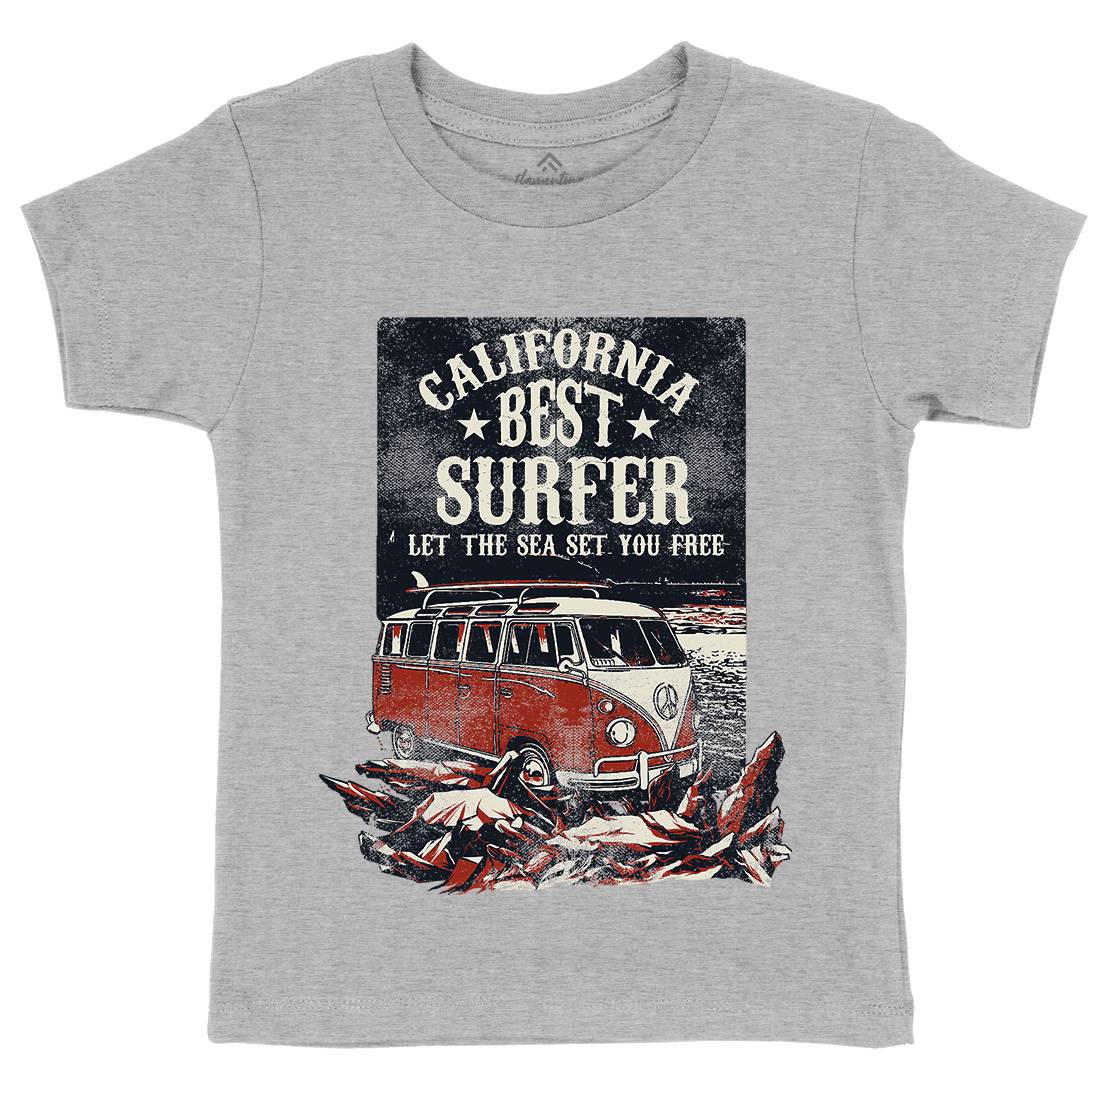 Let The Sea Set You Free Kids Crew Neck T-Shirt Surf C956